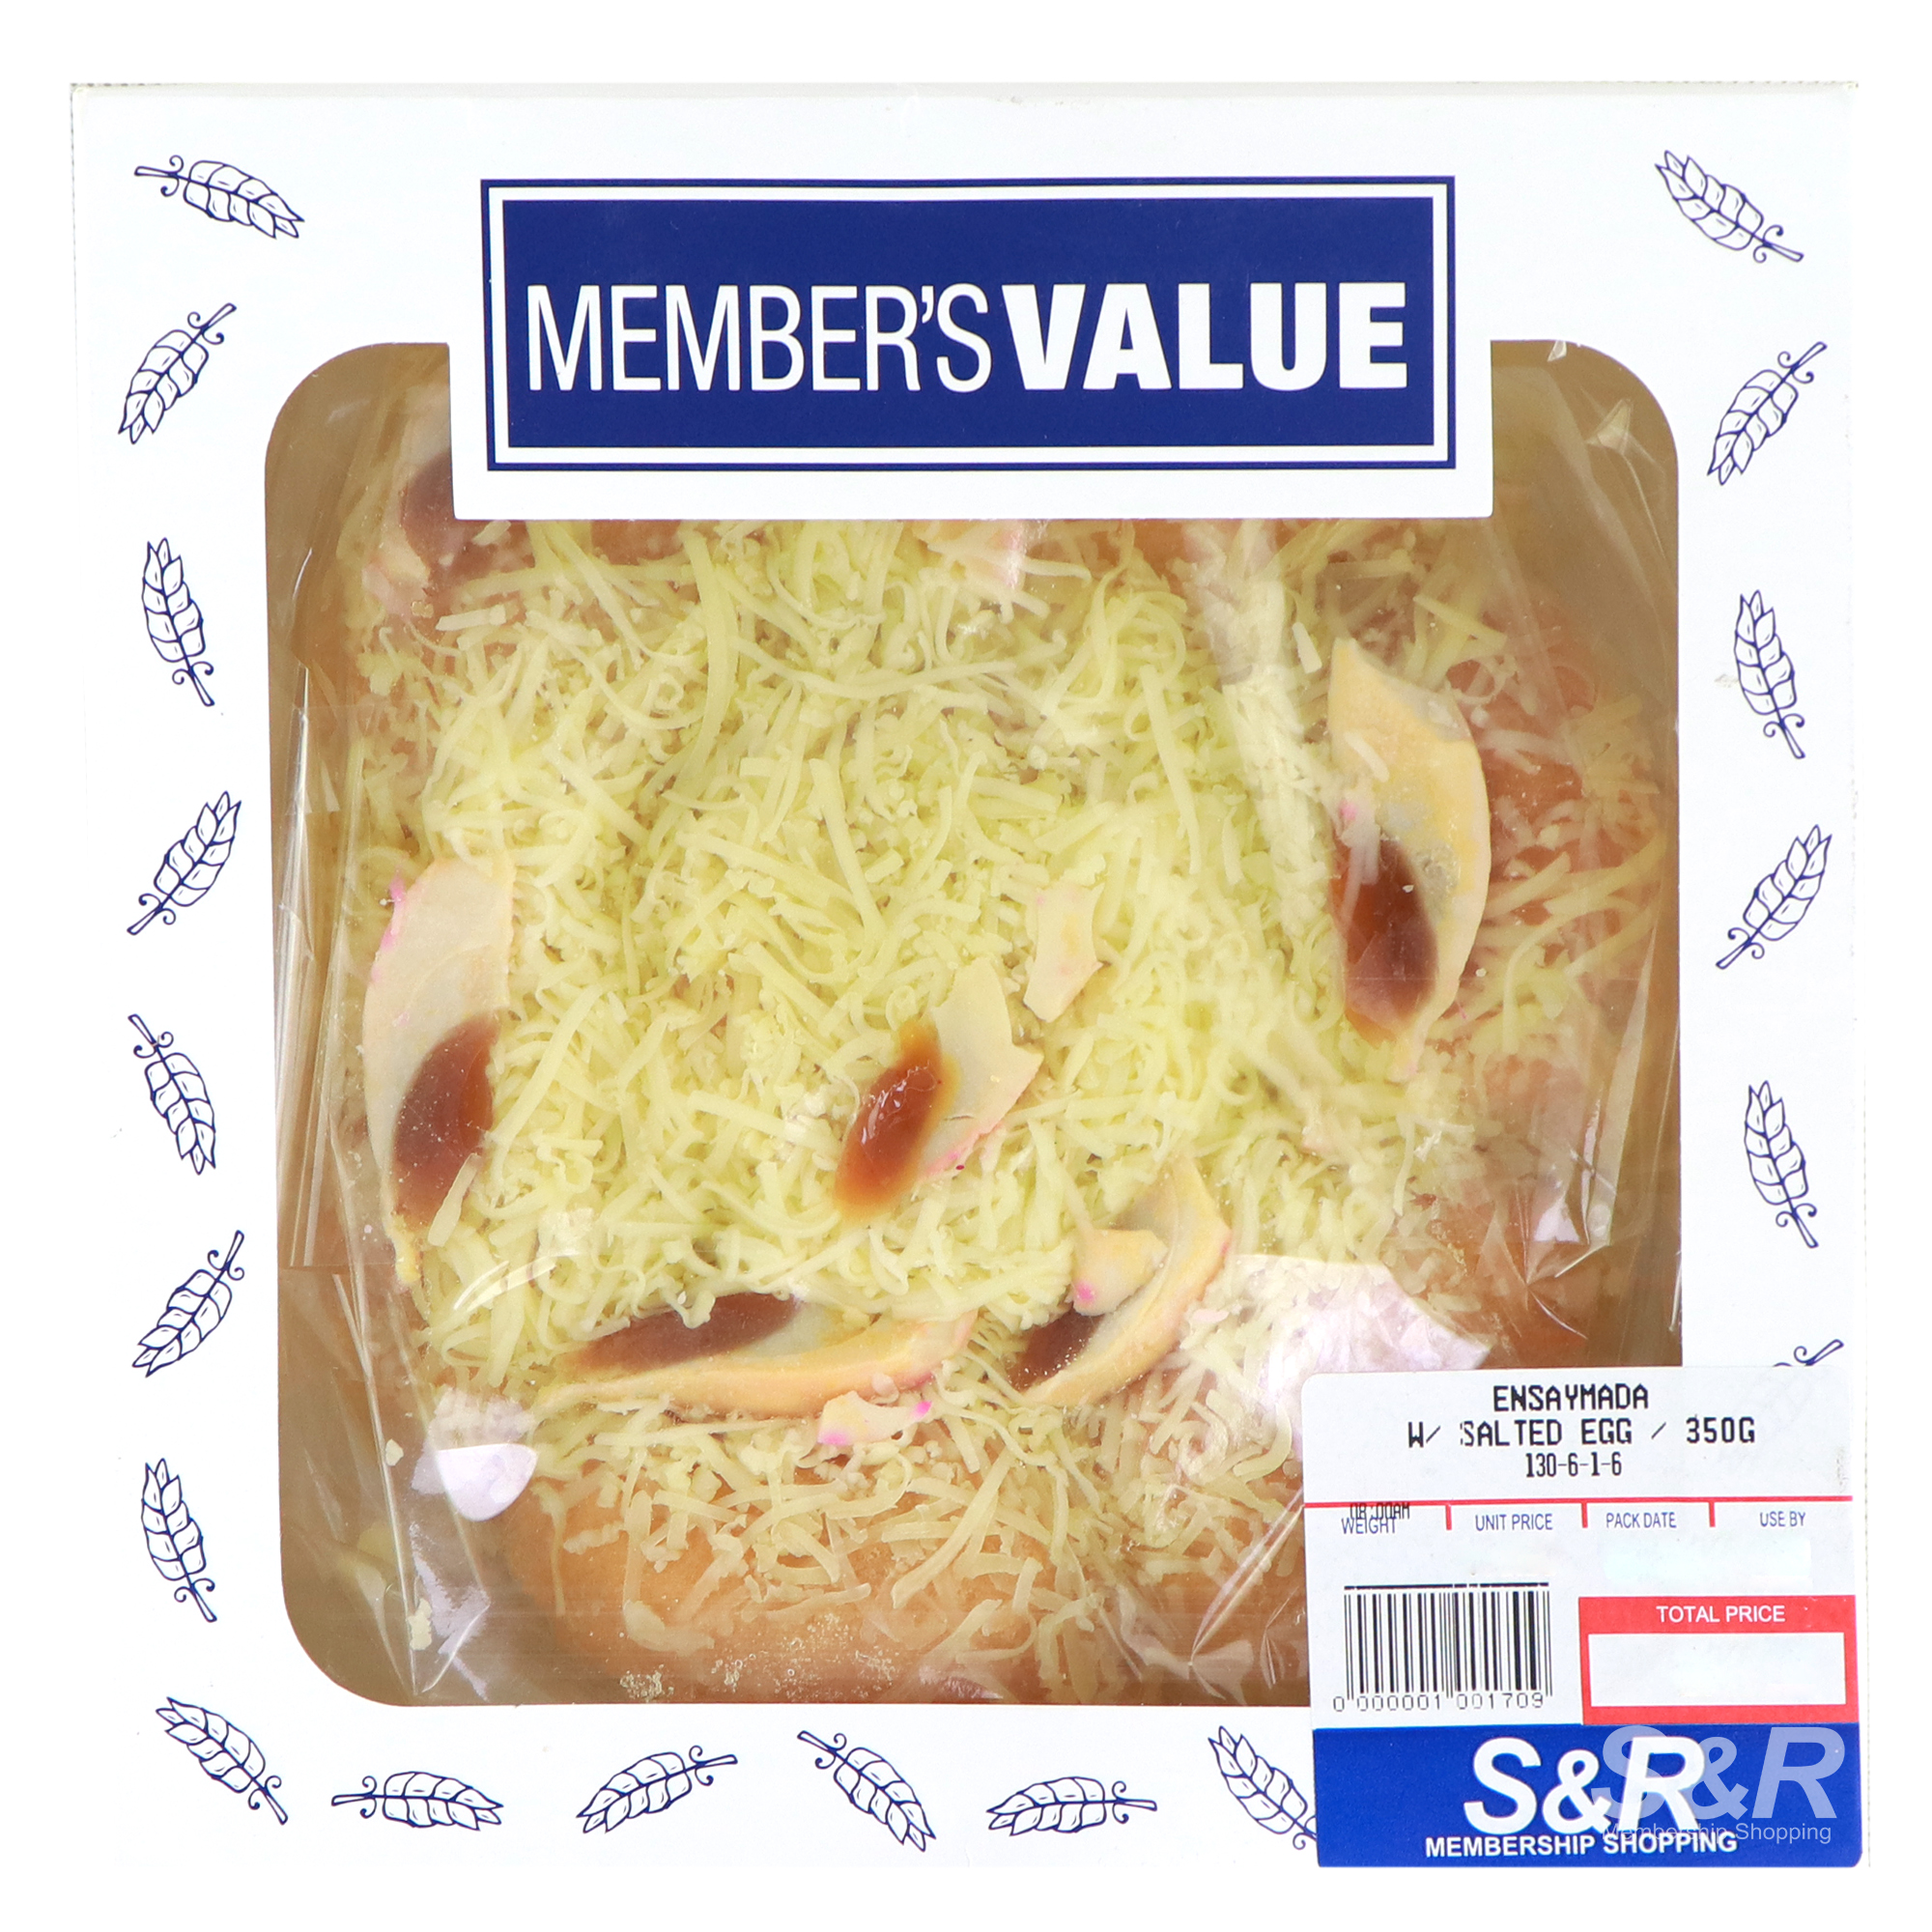 Member's Value Ensaymada with Salted Egg 350g